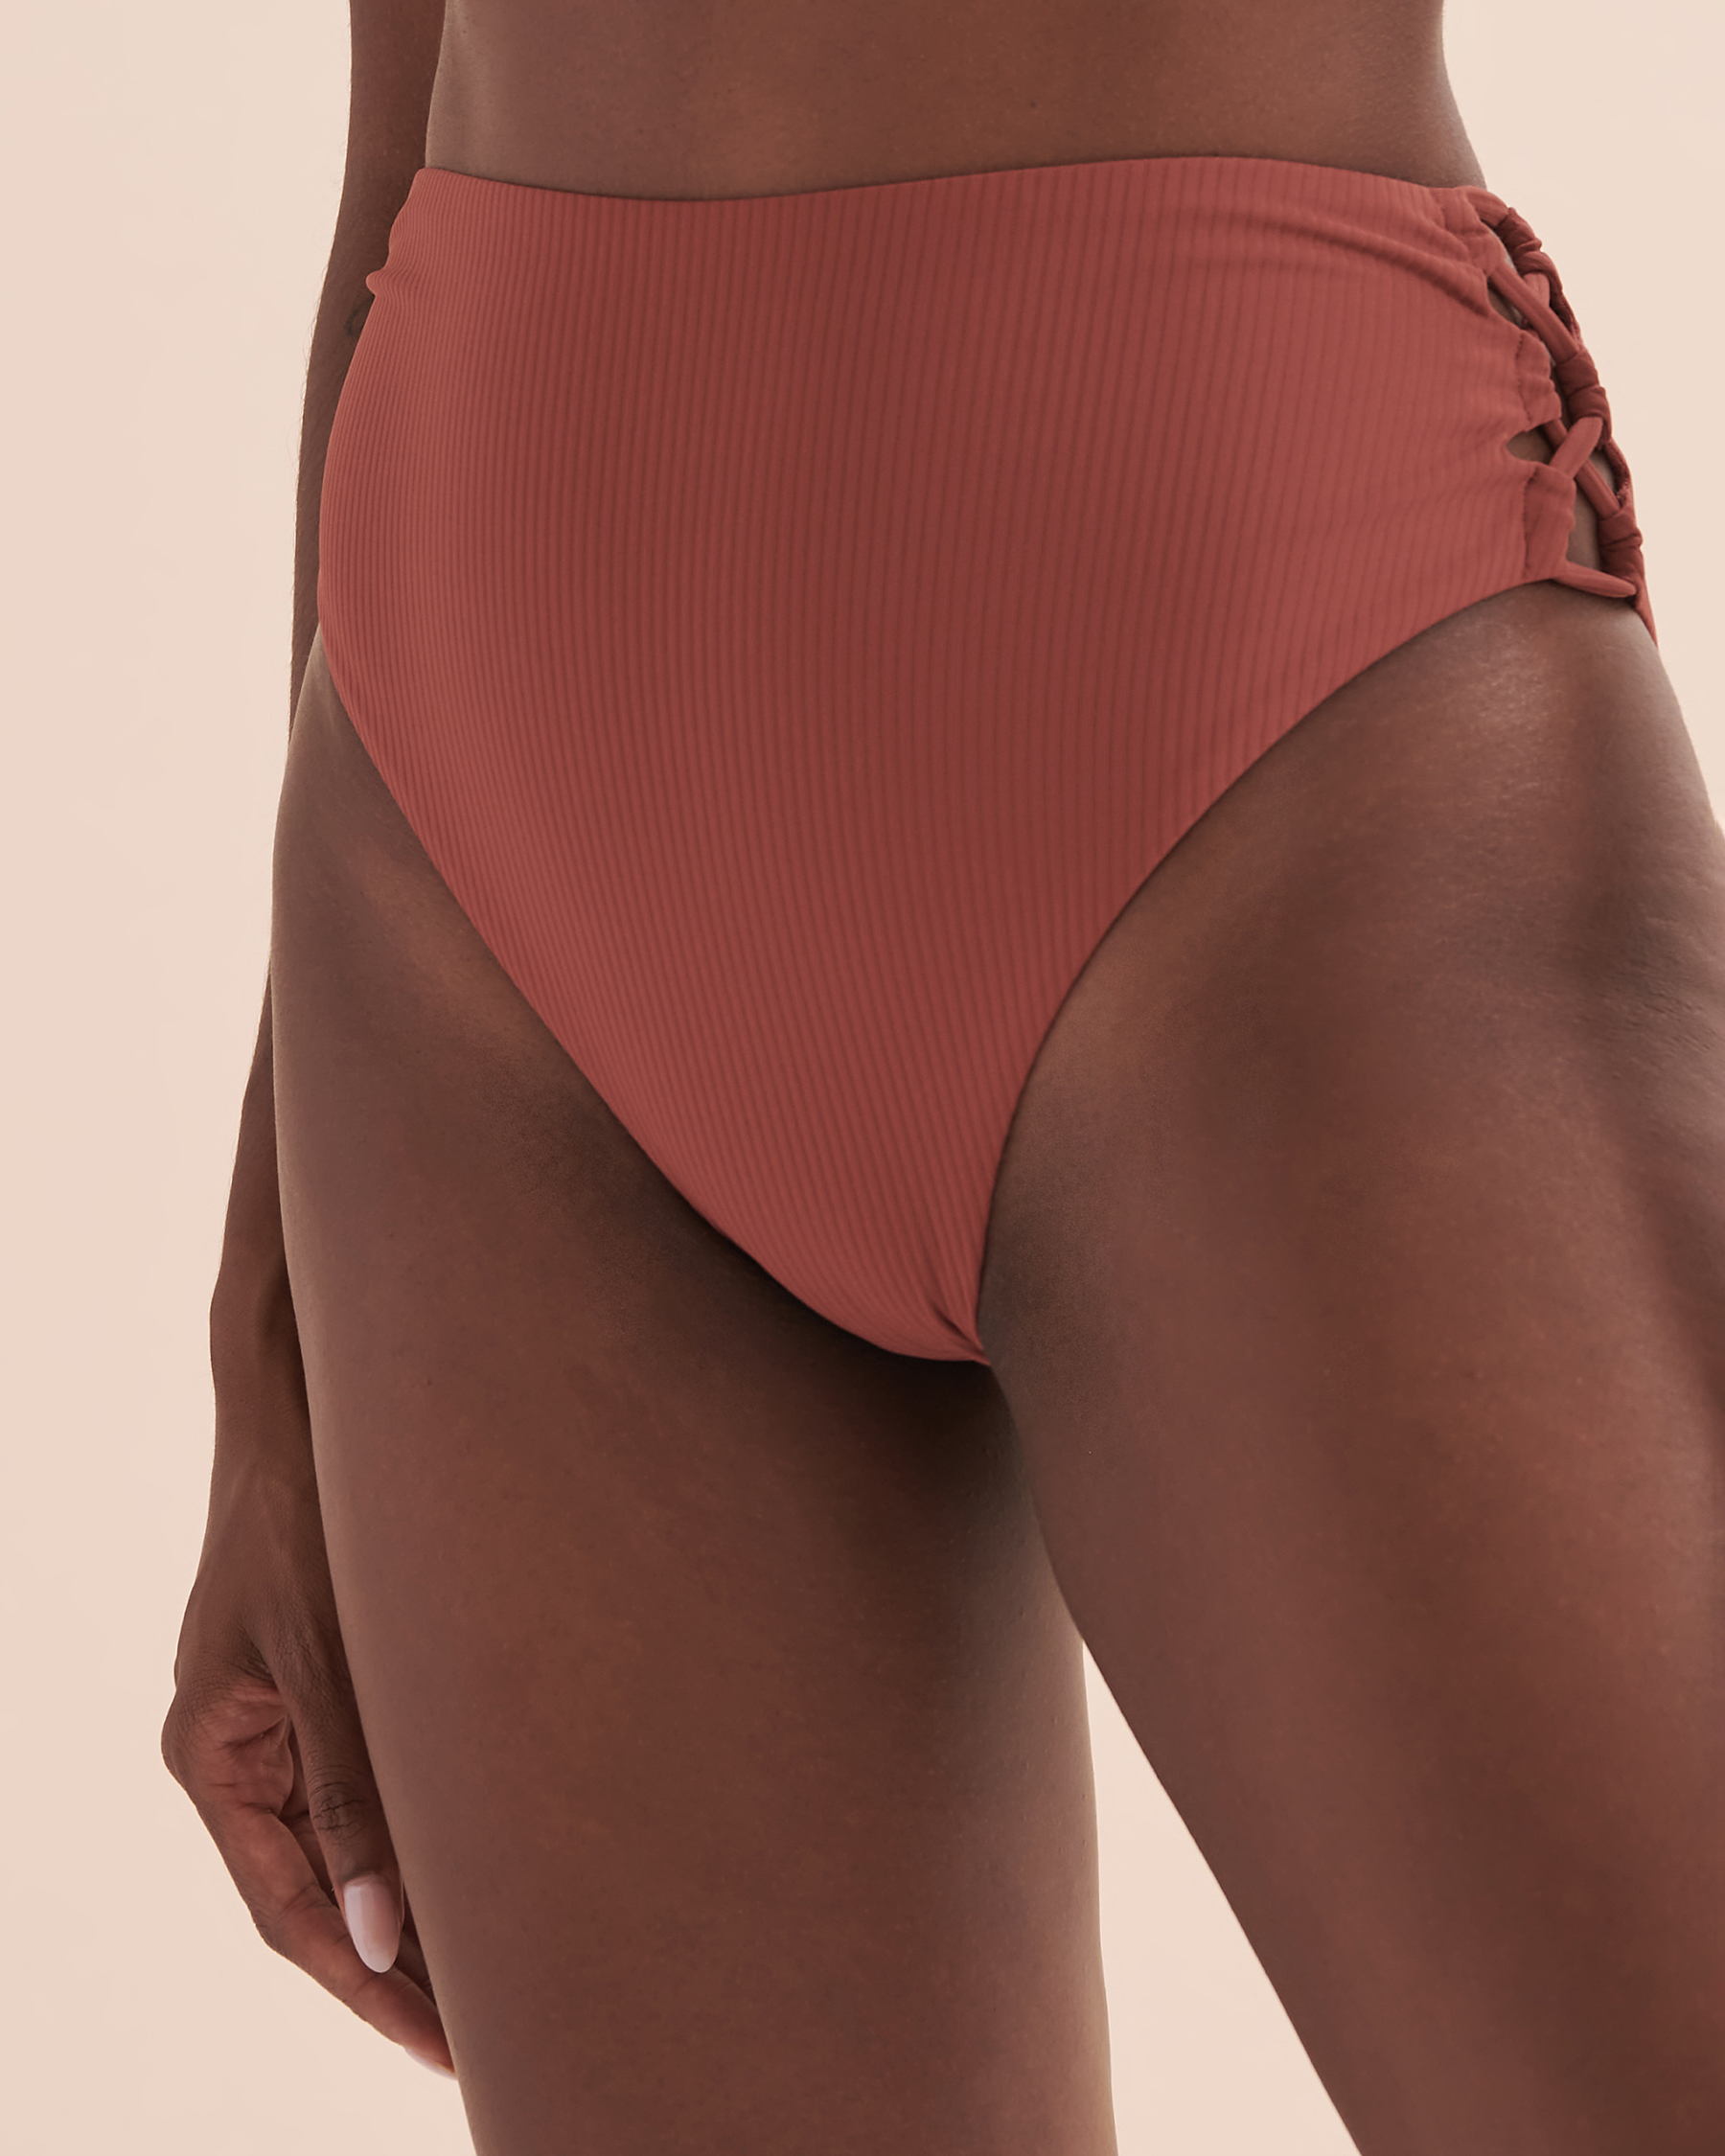 TROPIK Textured Side Tie High Waist Bikini Bottom Brown 01300236 - View4